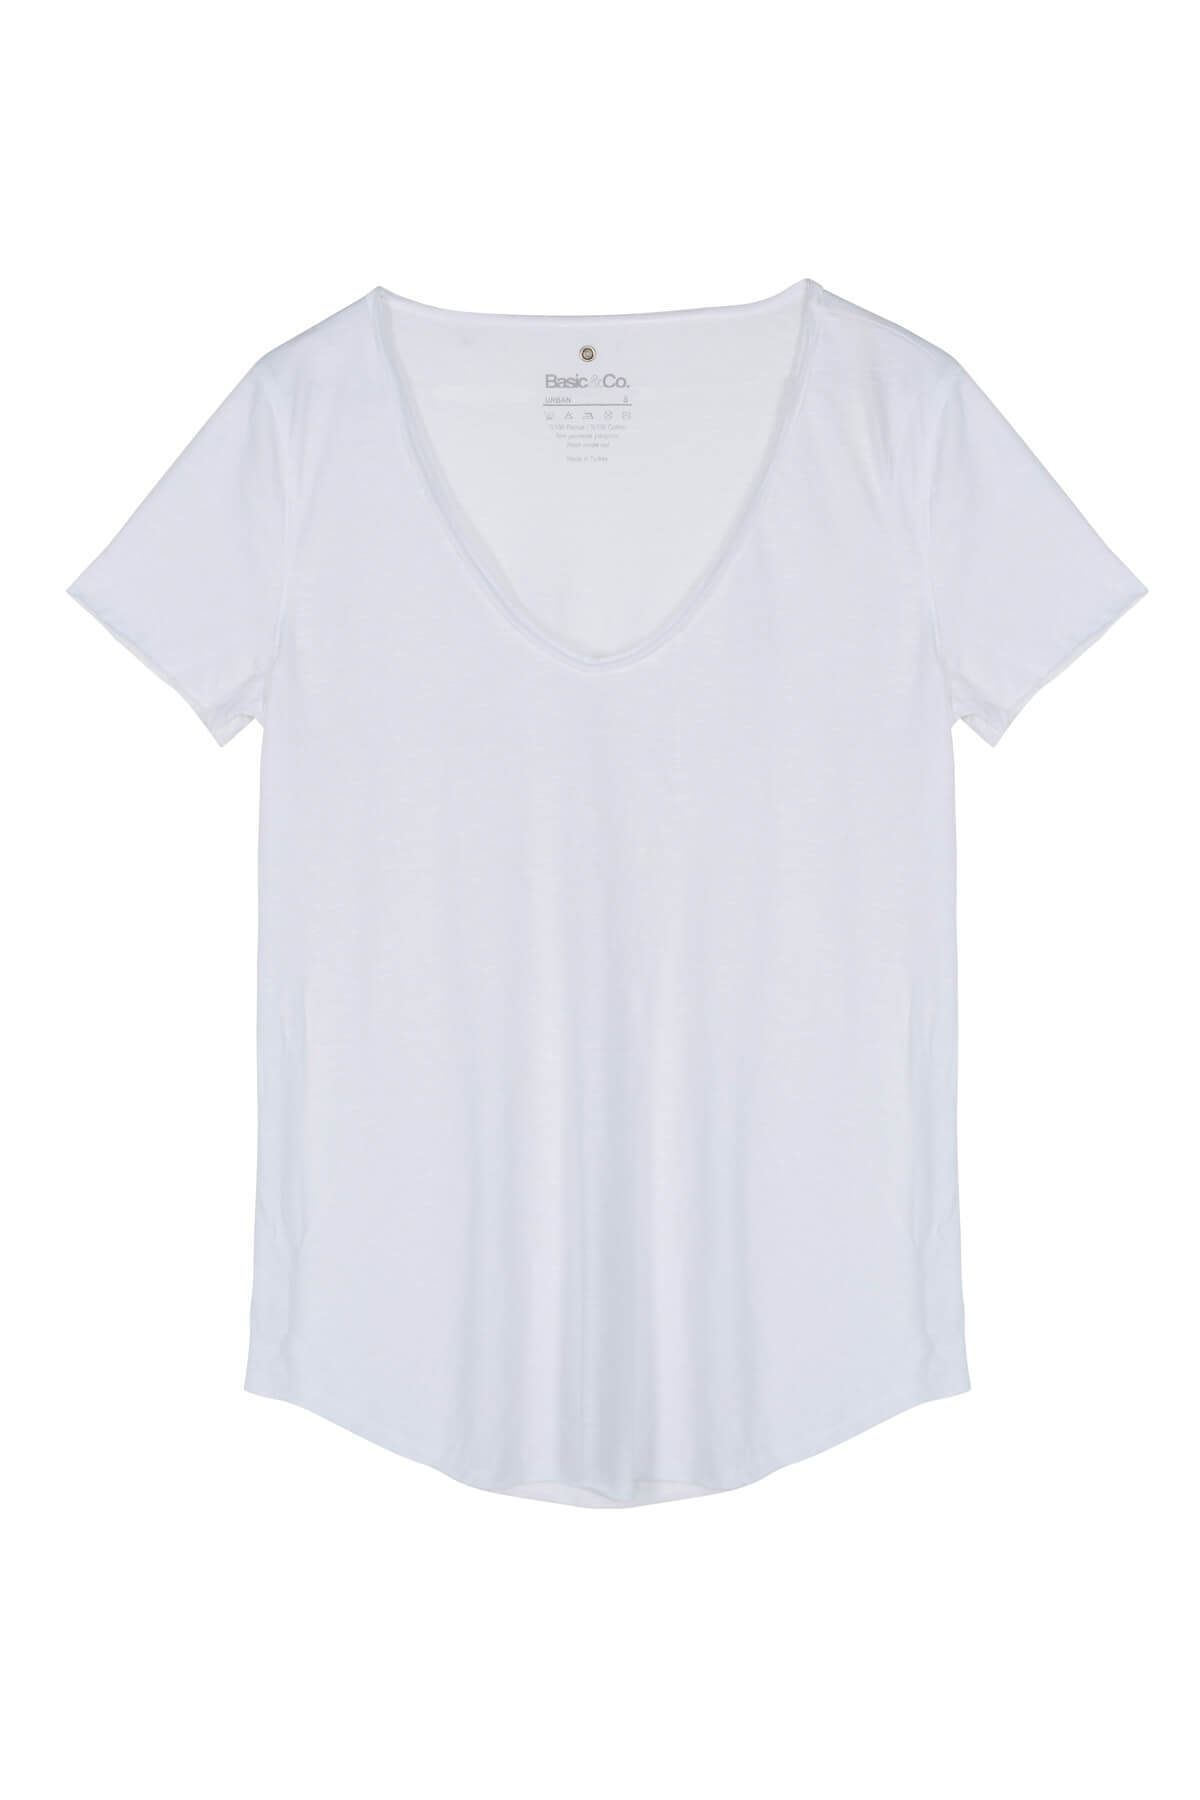 Basic Co Kadın Beyaz T-Shirt URB001